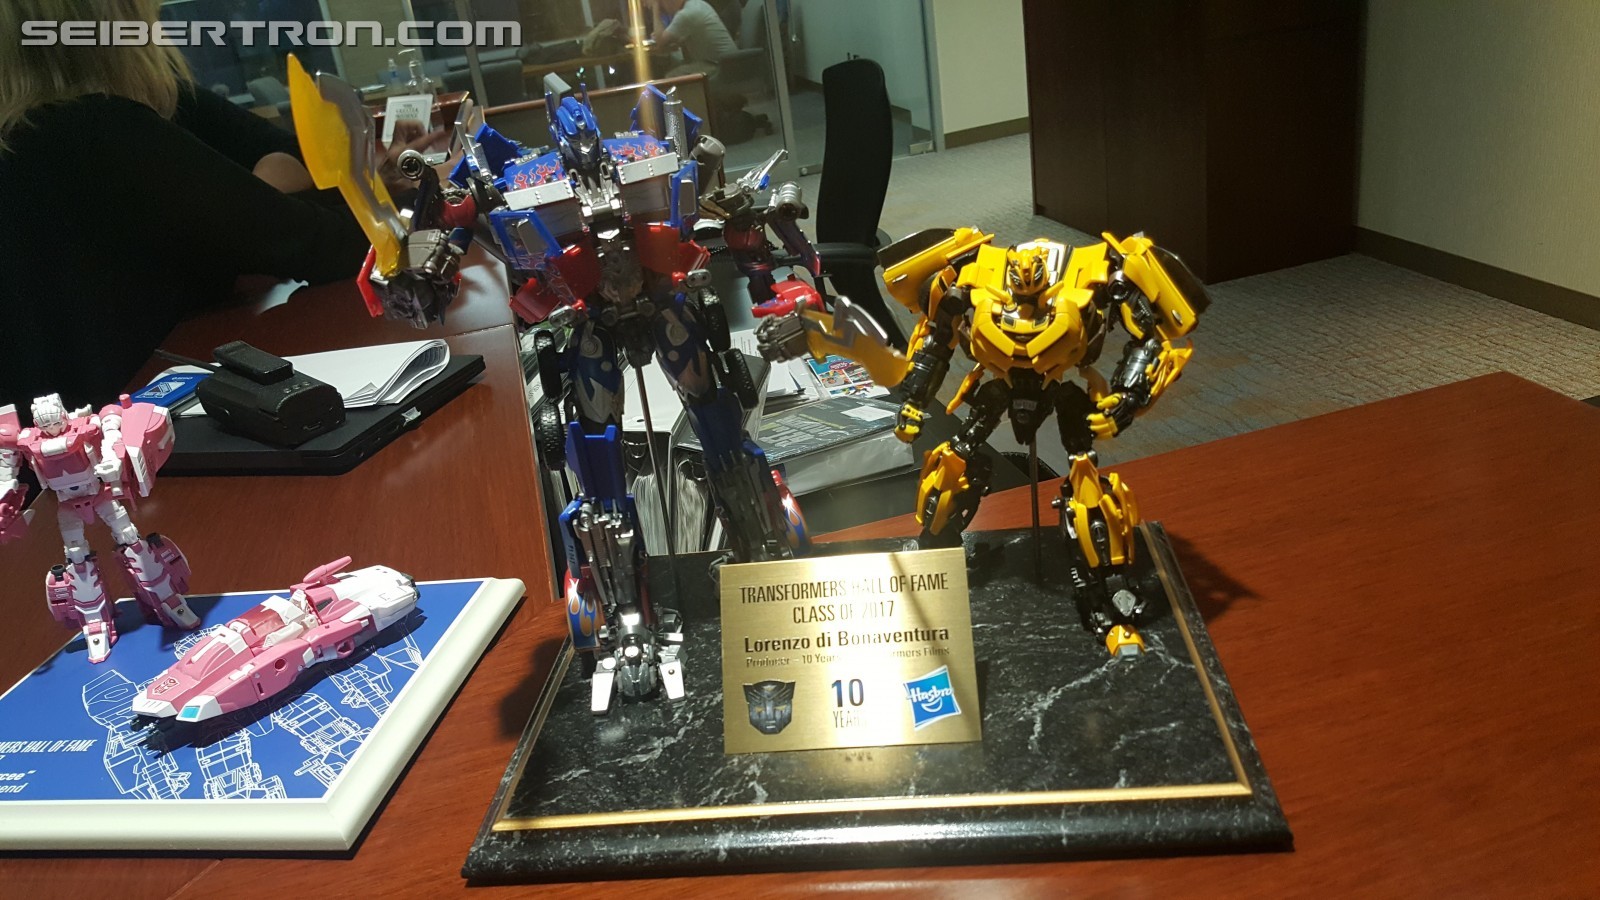 Transformers News: #HASCON 2017 Hall of Fame Awards awarded to Susan Blu and Lorenzo di Bonadventura